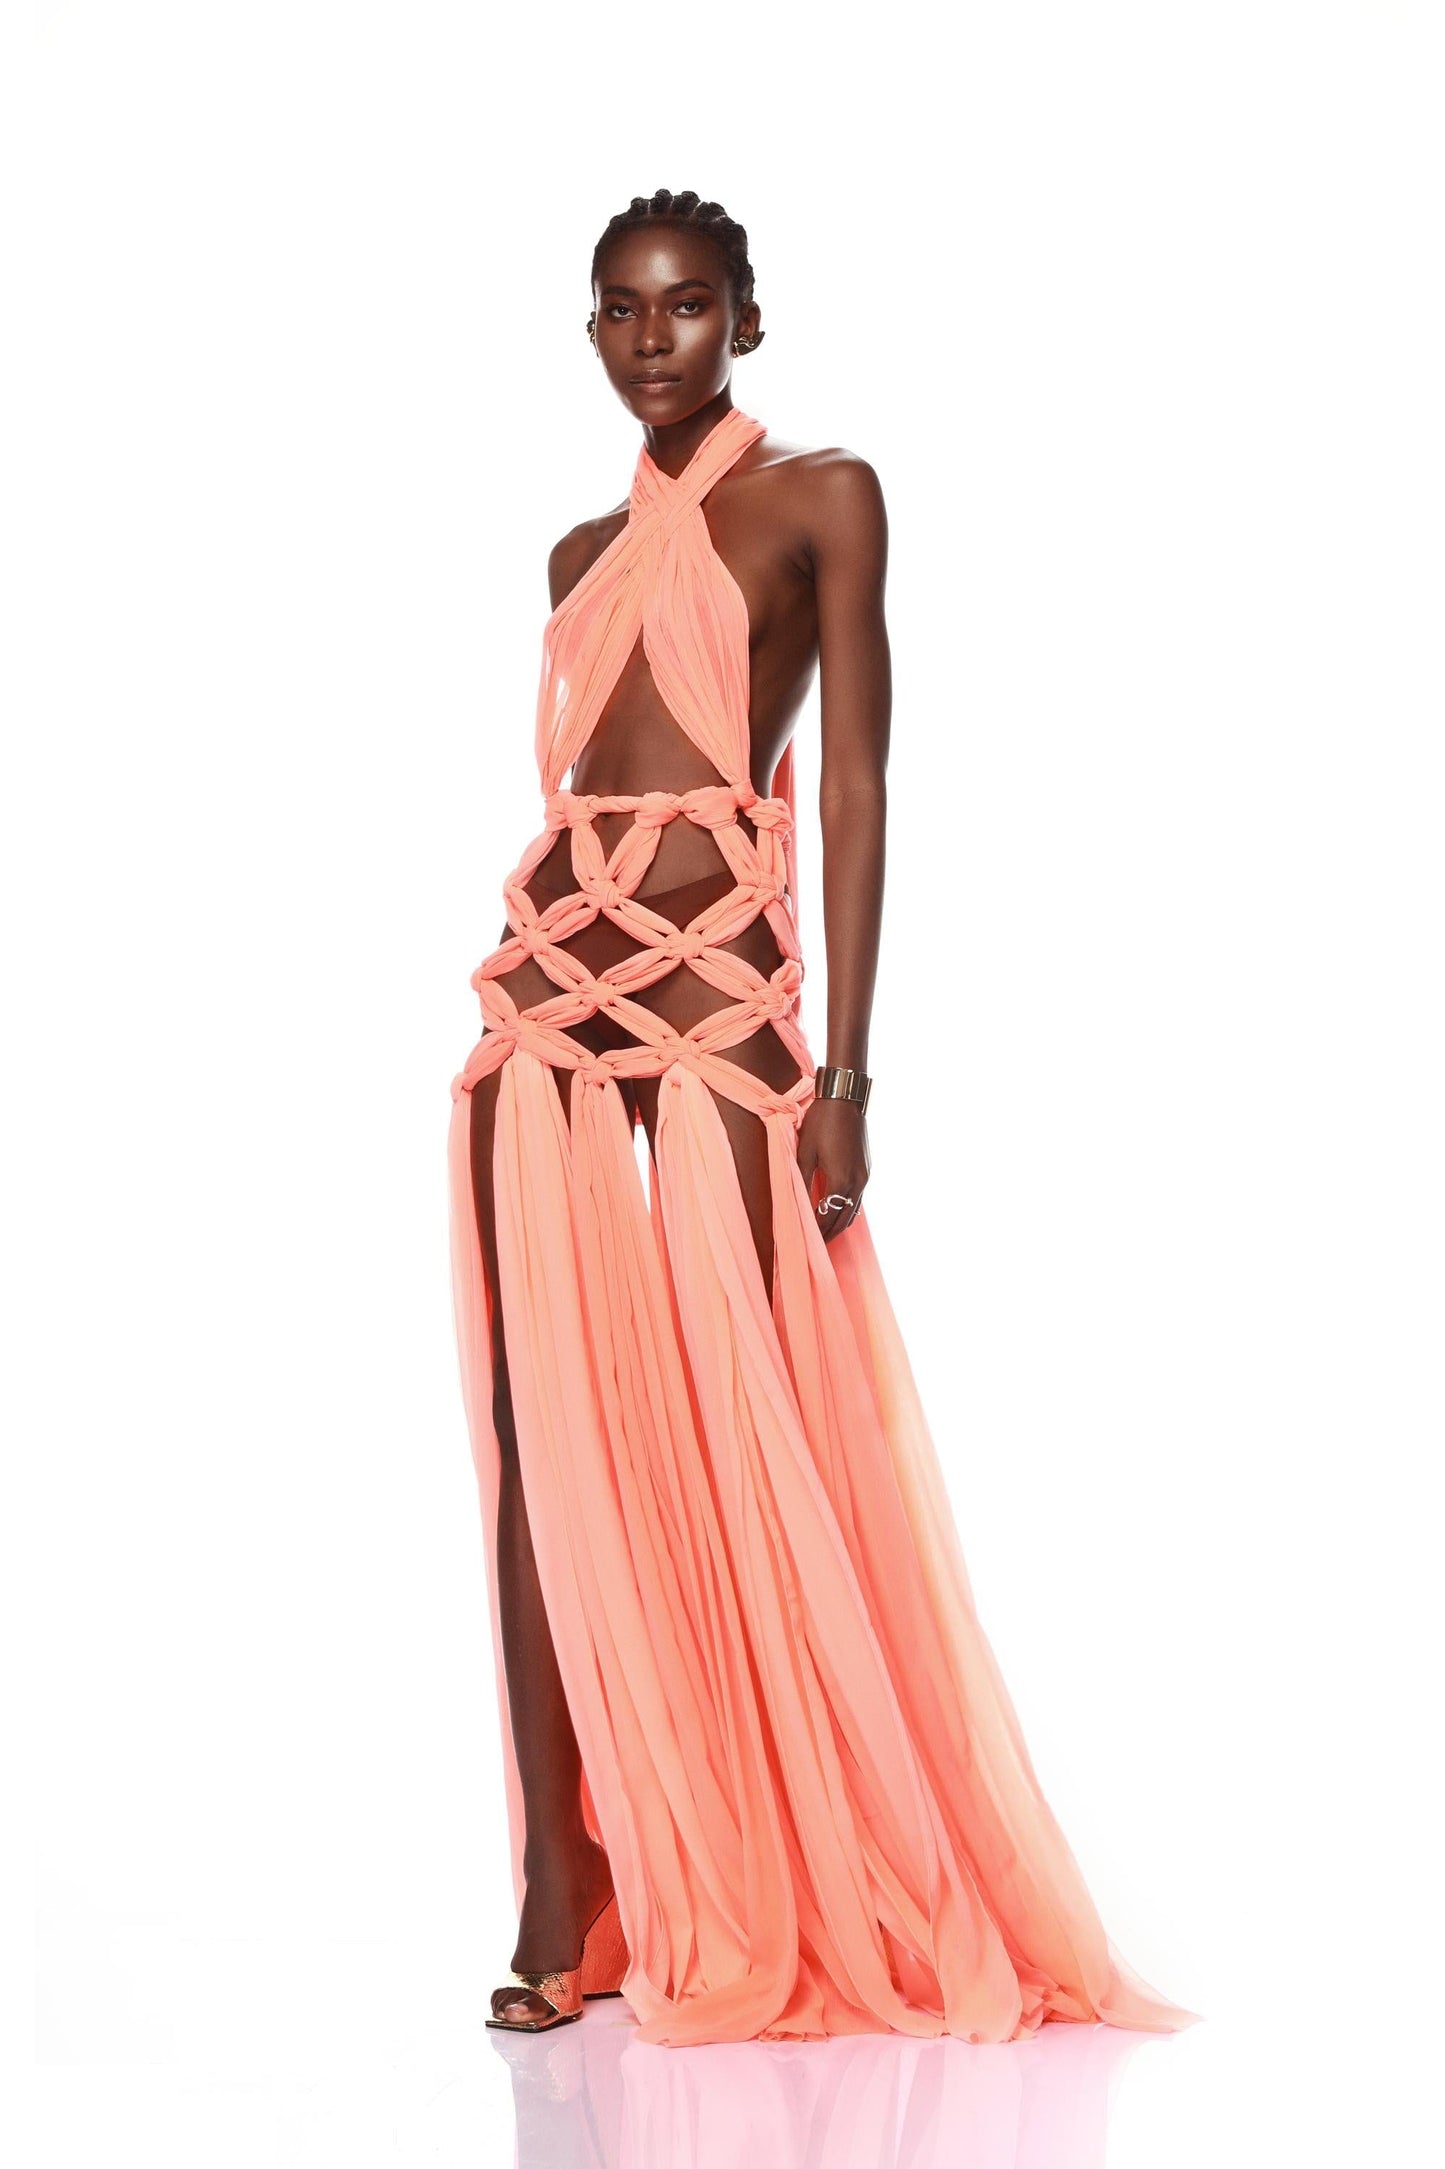 somalia-pink-gown-02